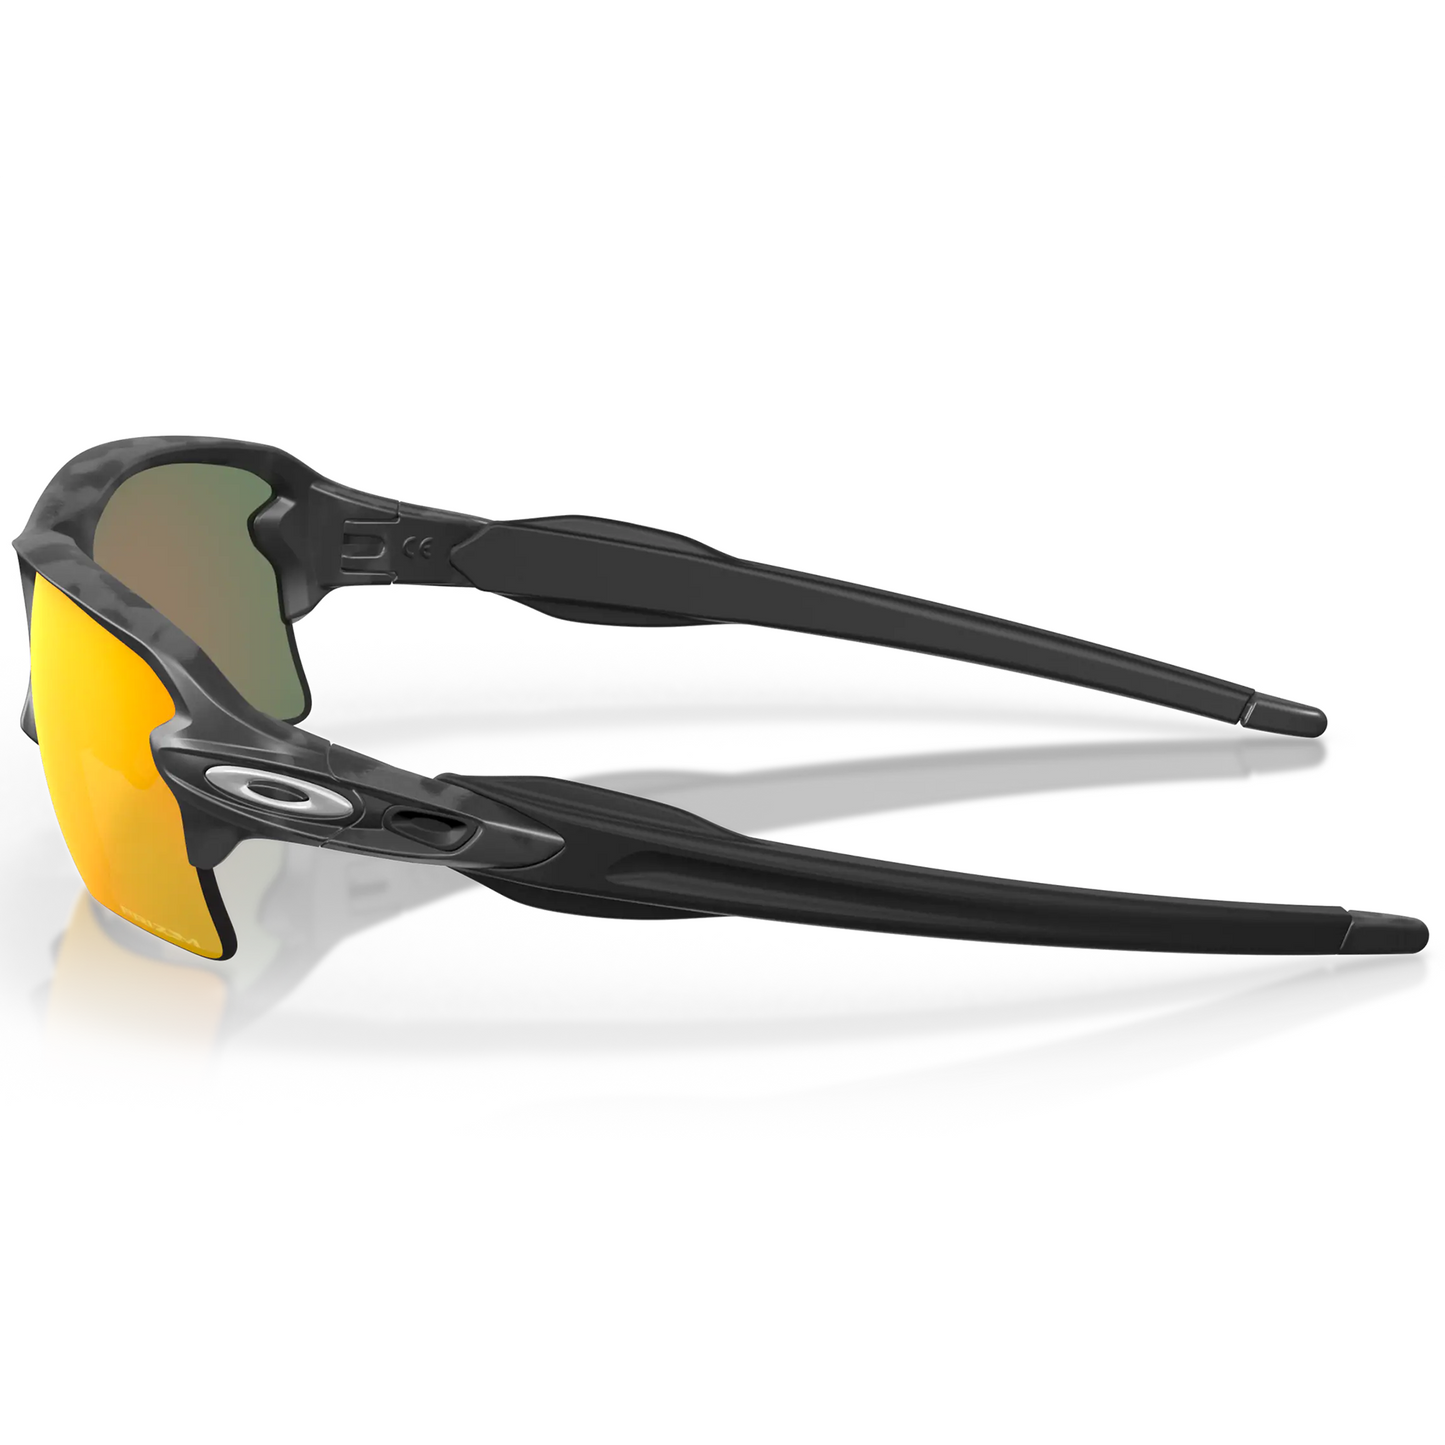 Oakley Flak 2.0 XL Sunglasses (Black Camo) Prizm Ruby Lens - Free Case